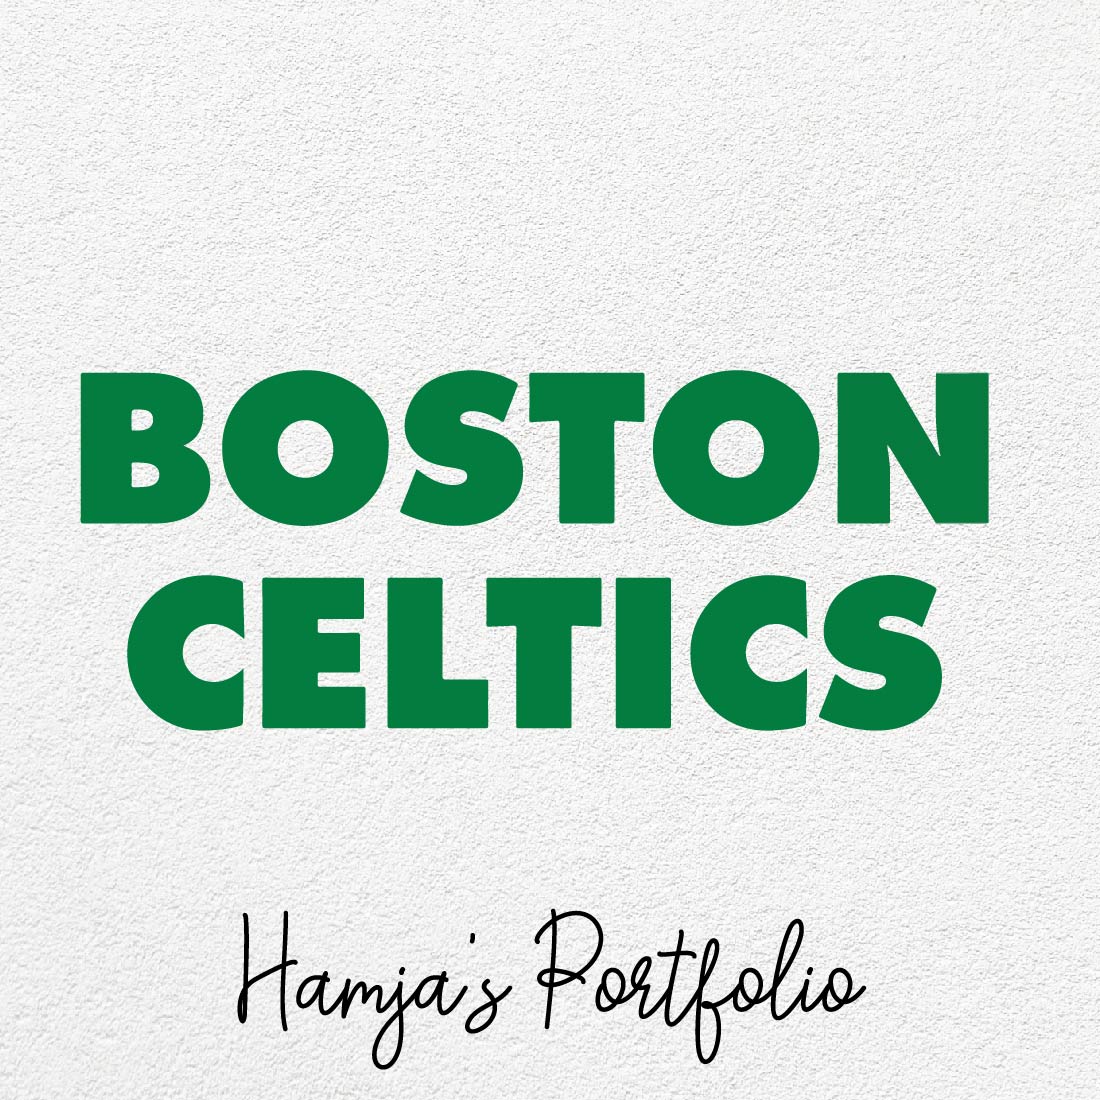 Bostonceltic Logo Vector Set cover image.